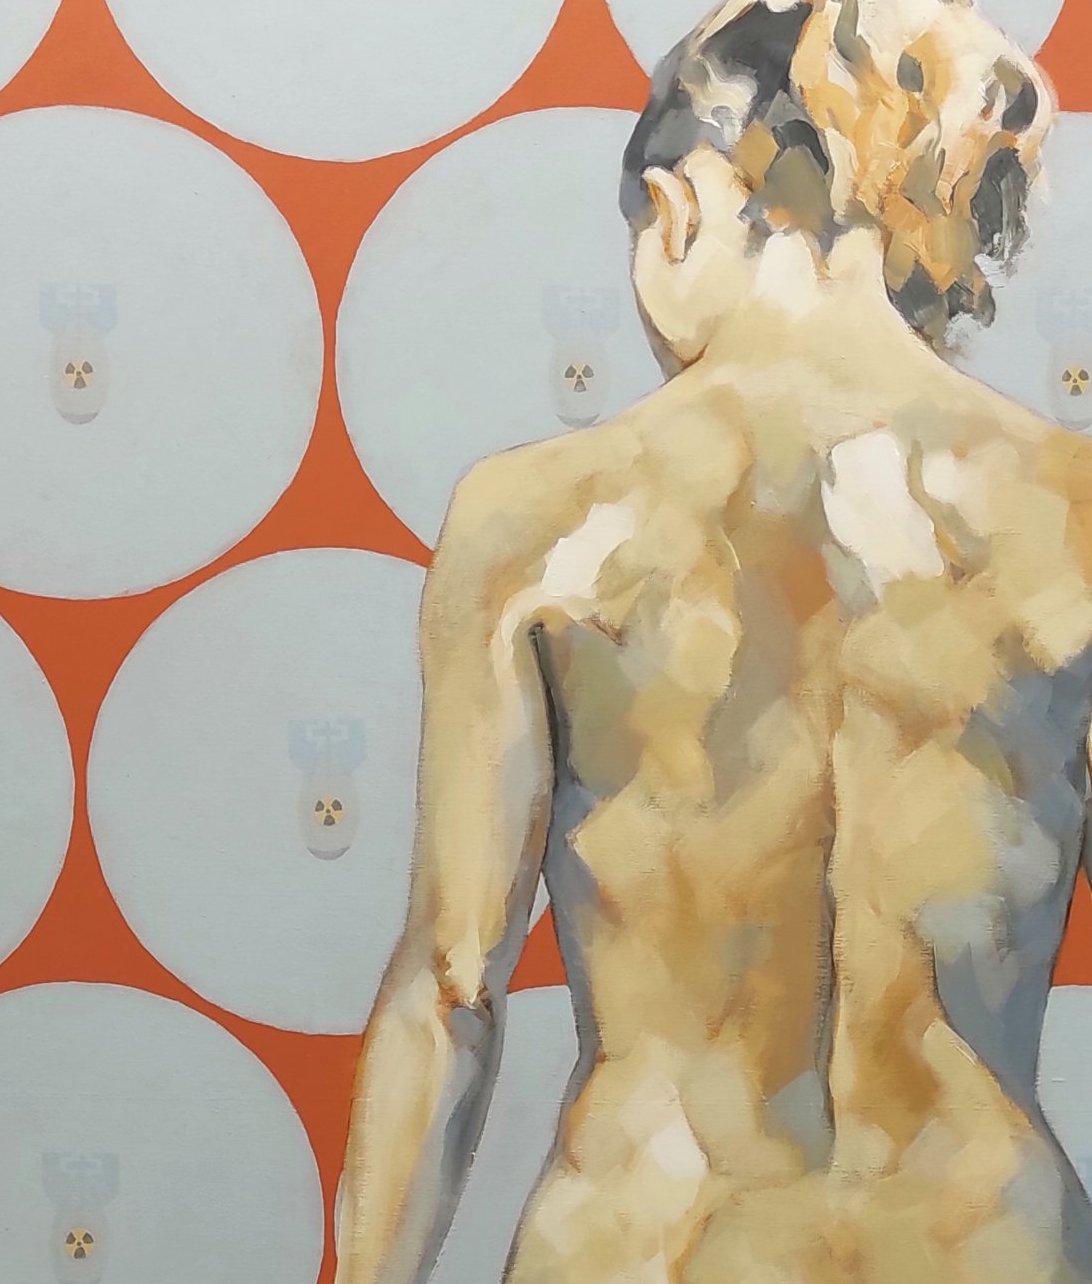 Atomitzada - 21st Century, Figurative, Nude, Female body, Feminism, Acrylic - Painting by Pep Anton Xaus